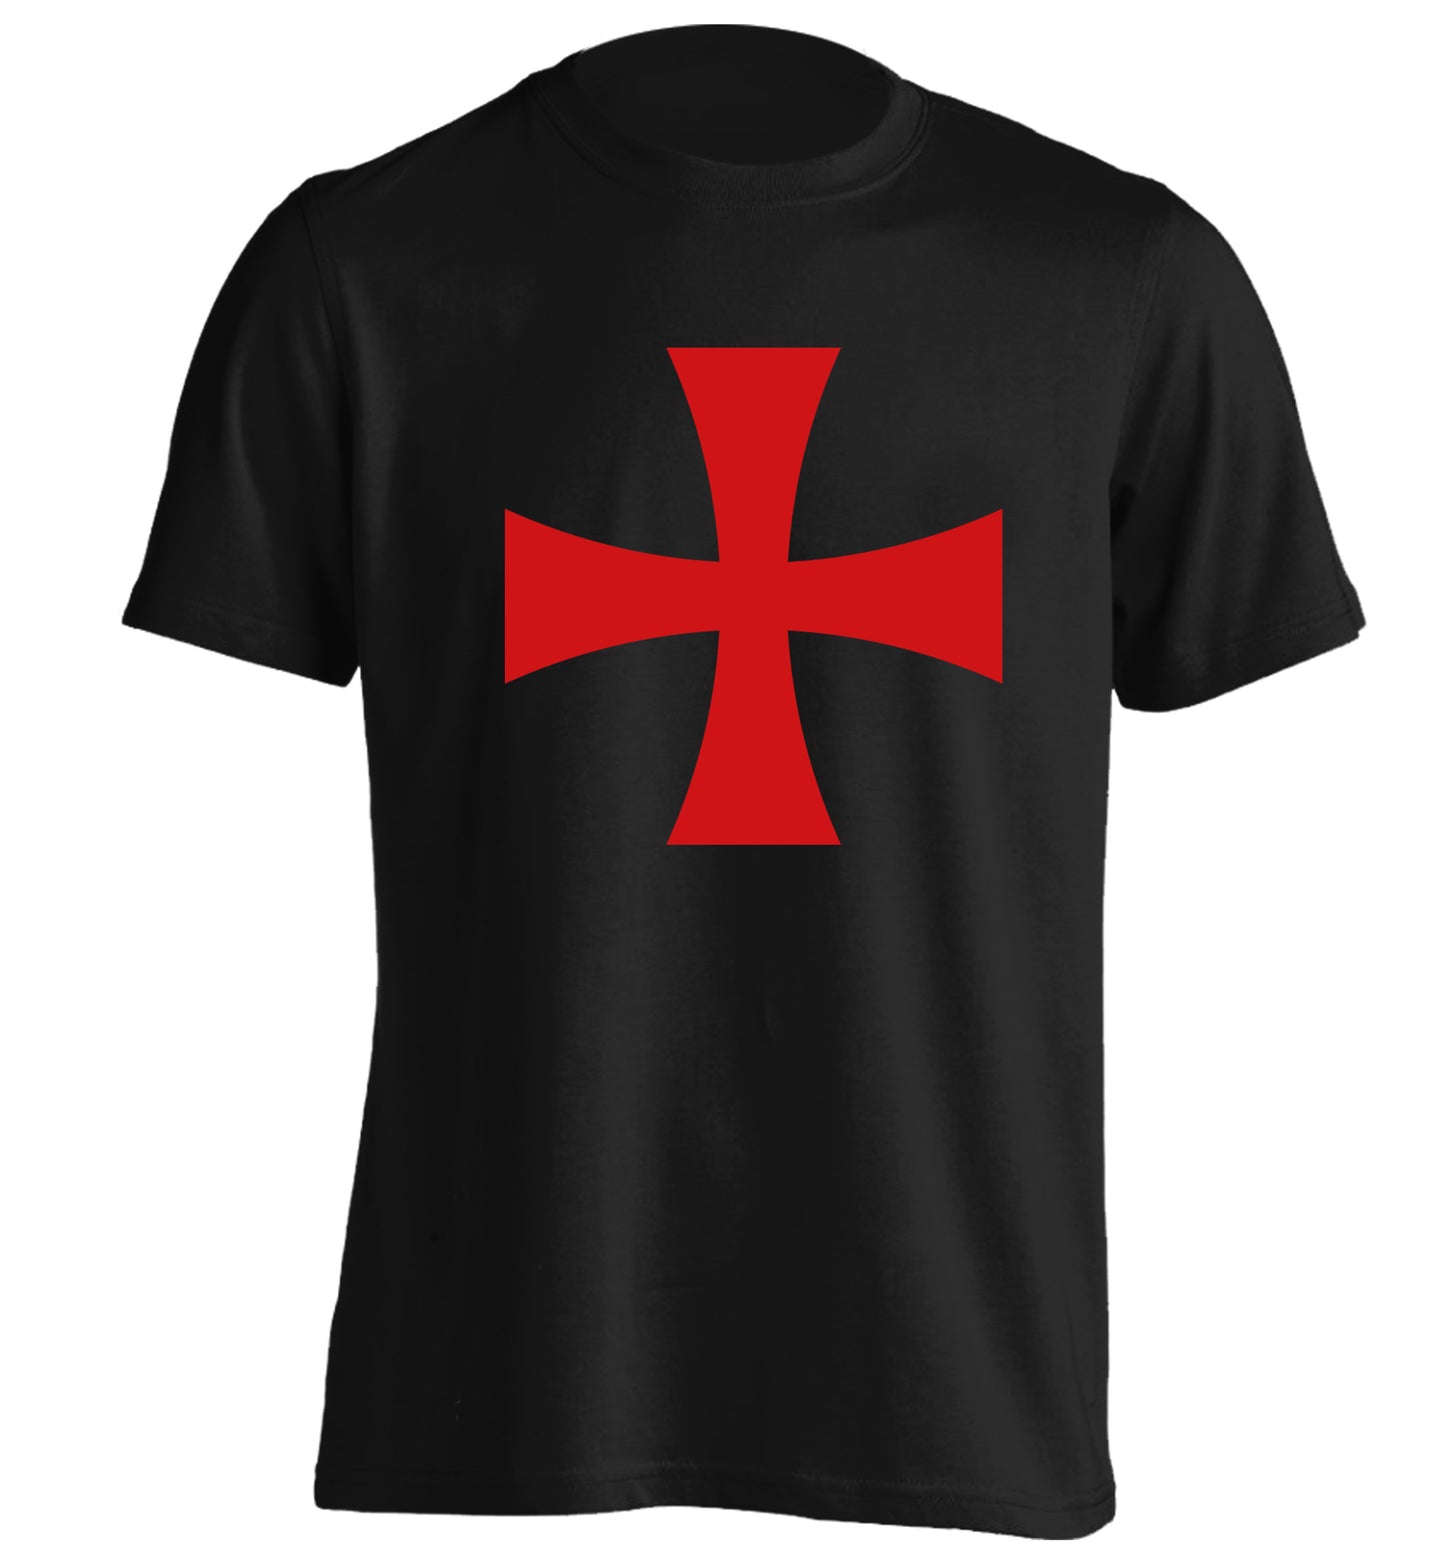 Knights Templar cross adults unisex black Tshirt 2XL